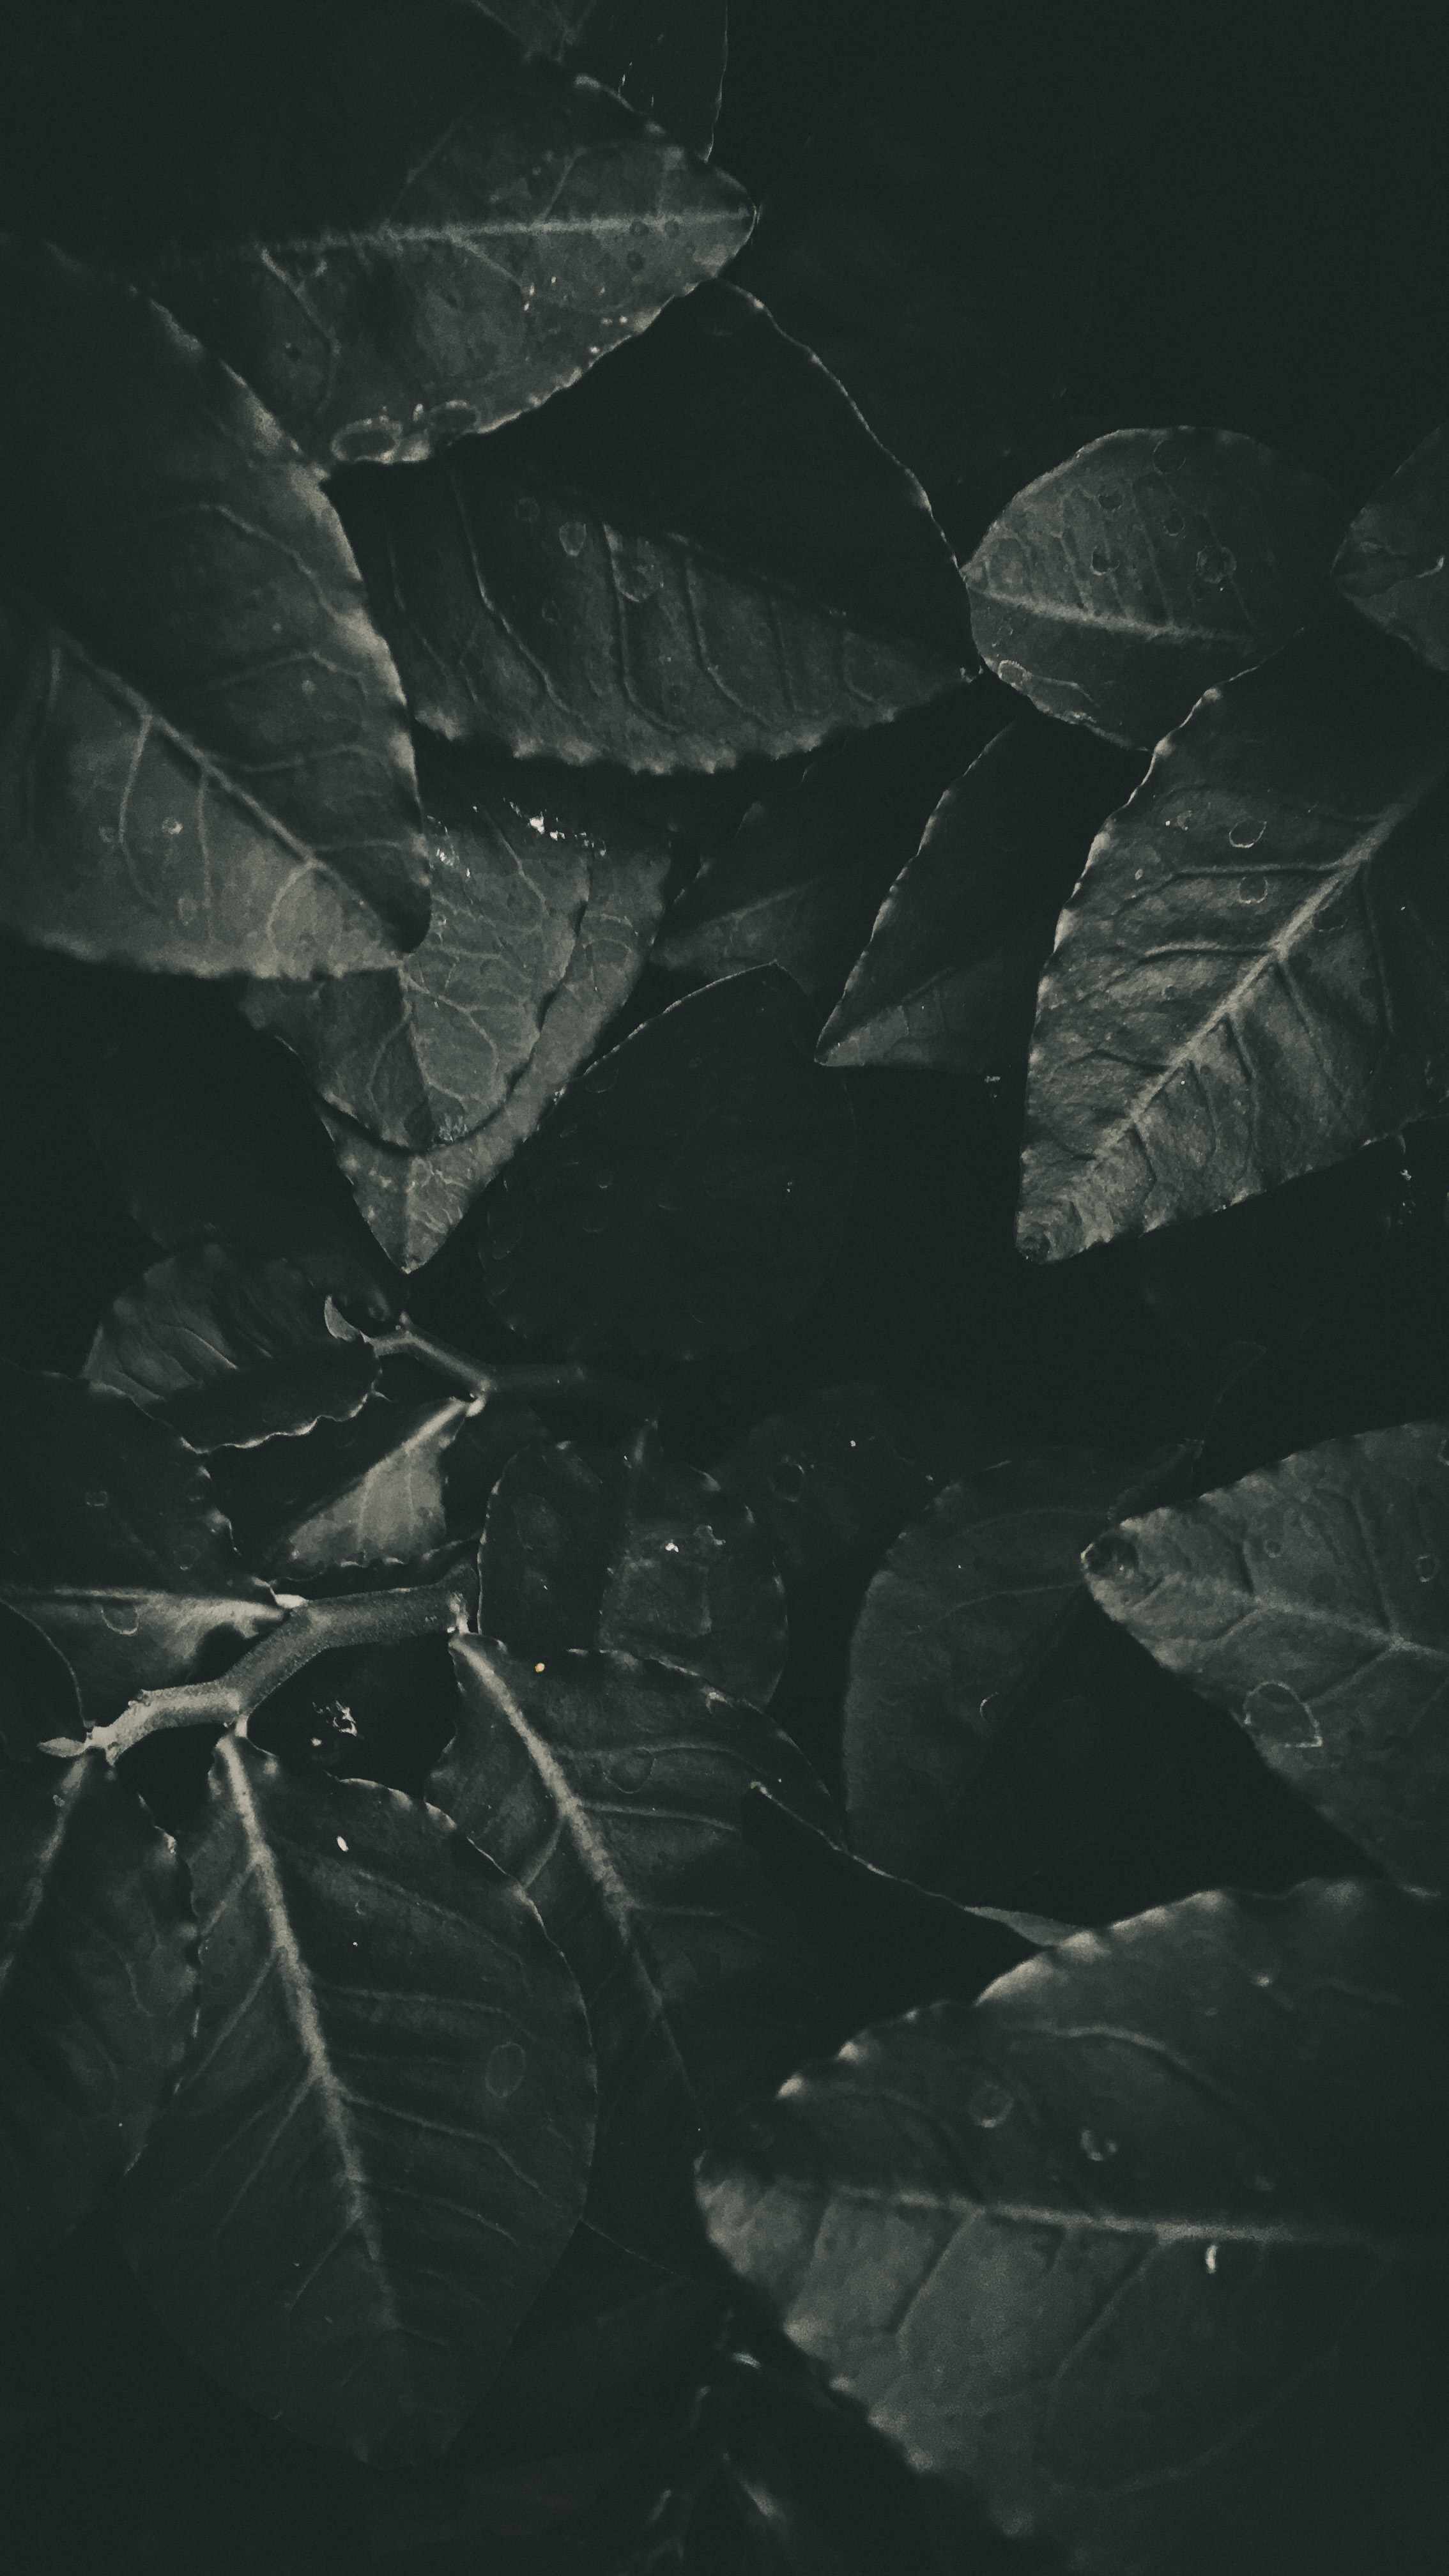 bw, dark, leaves, chb, foliage High Definition image